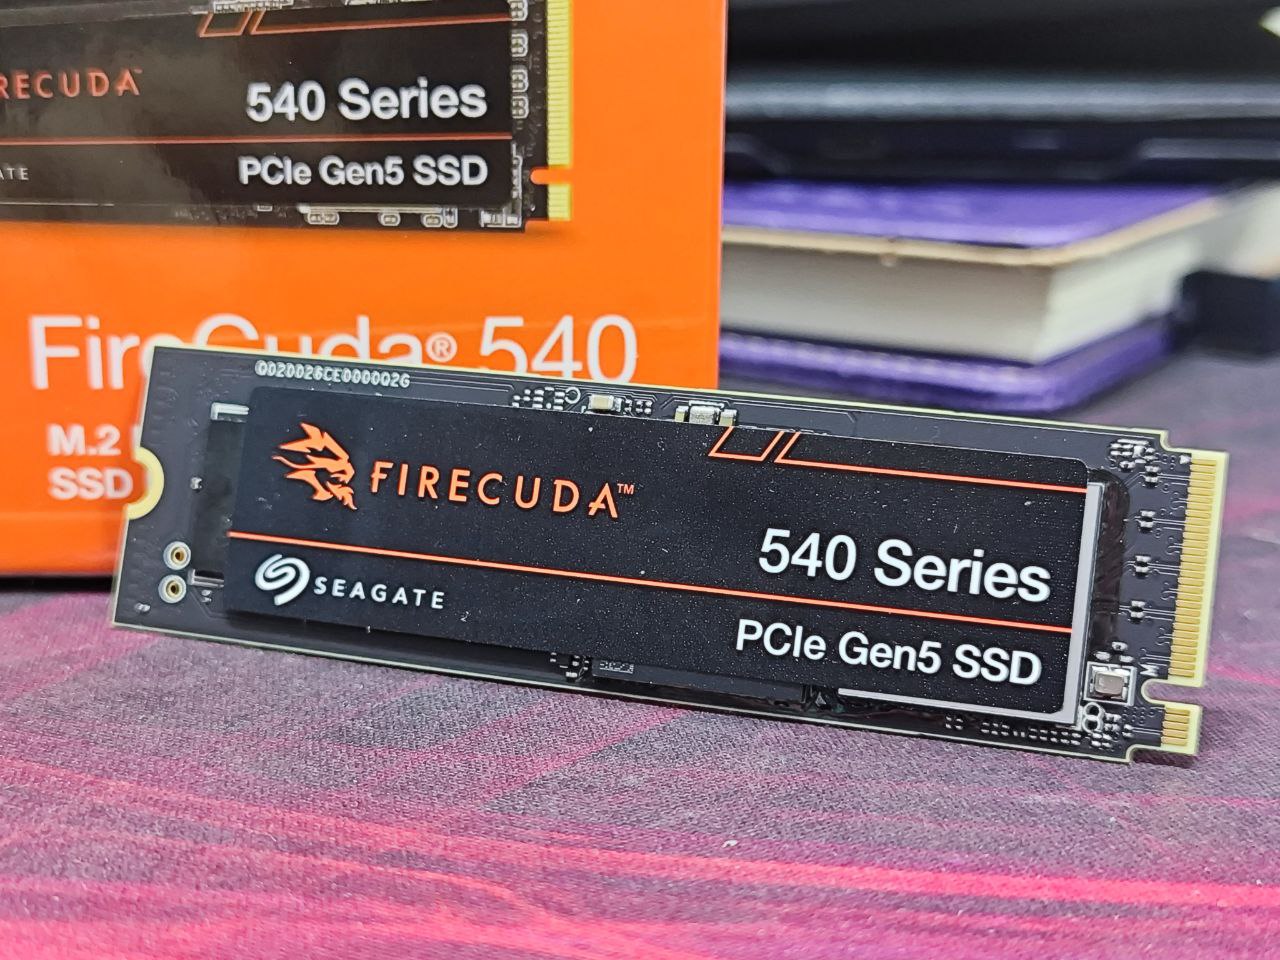 Seagate FireCuda 540 2TB PCIe Gen 5 SSD Review